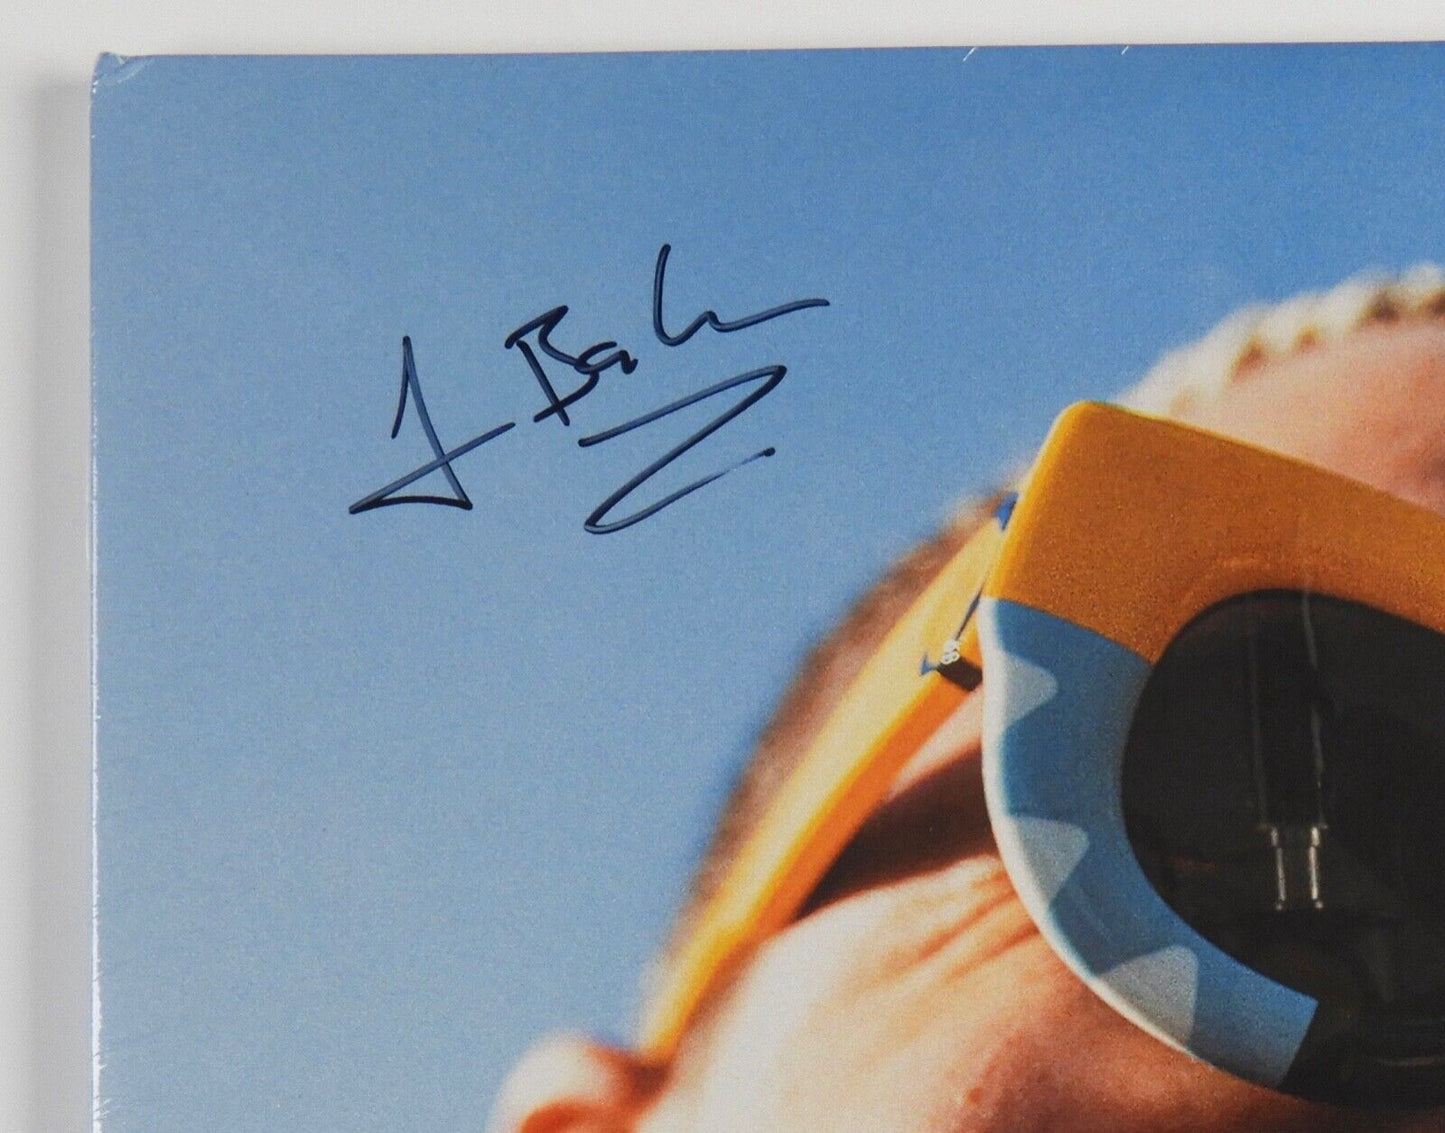 J Blavin Signed Autograph Album Record Vinyl Happy To See You JSA